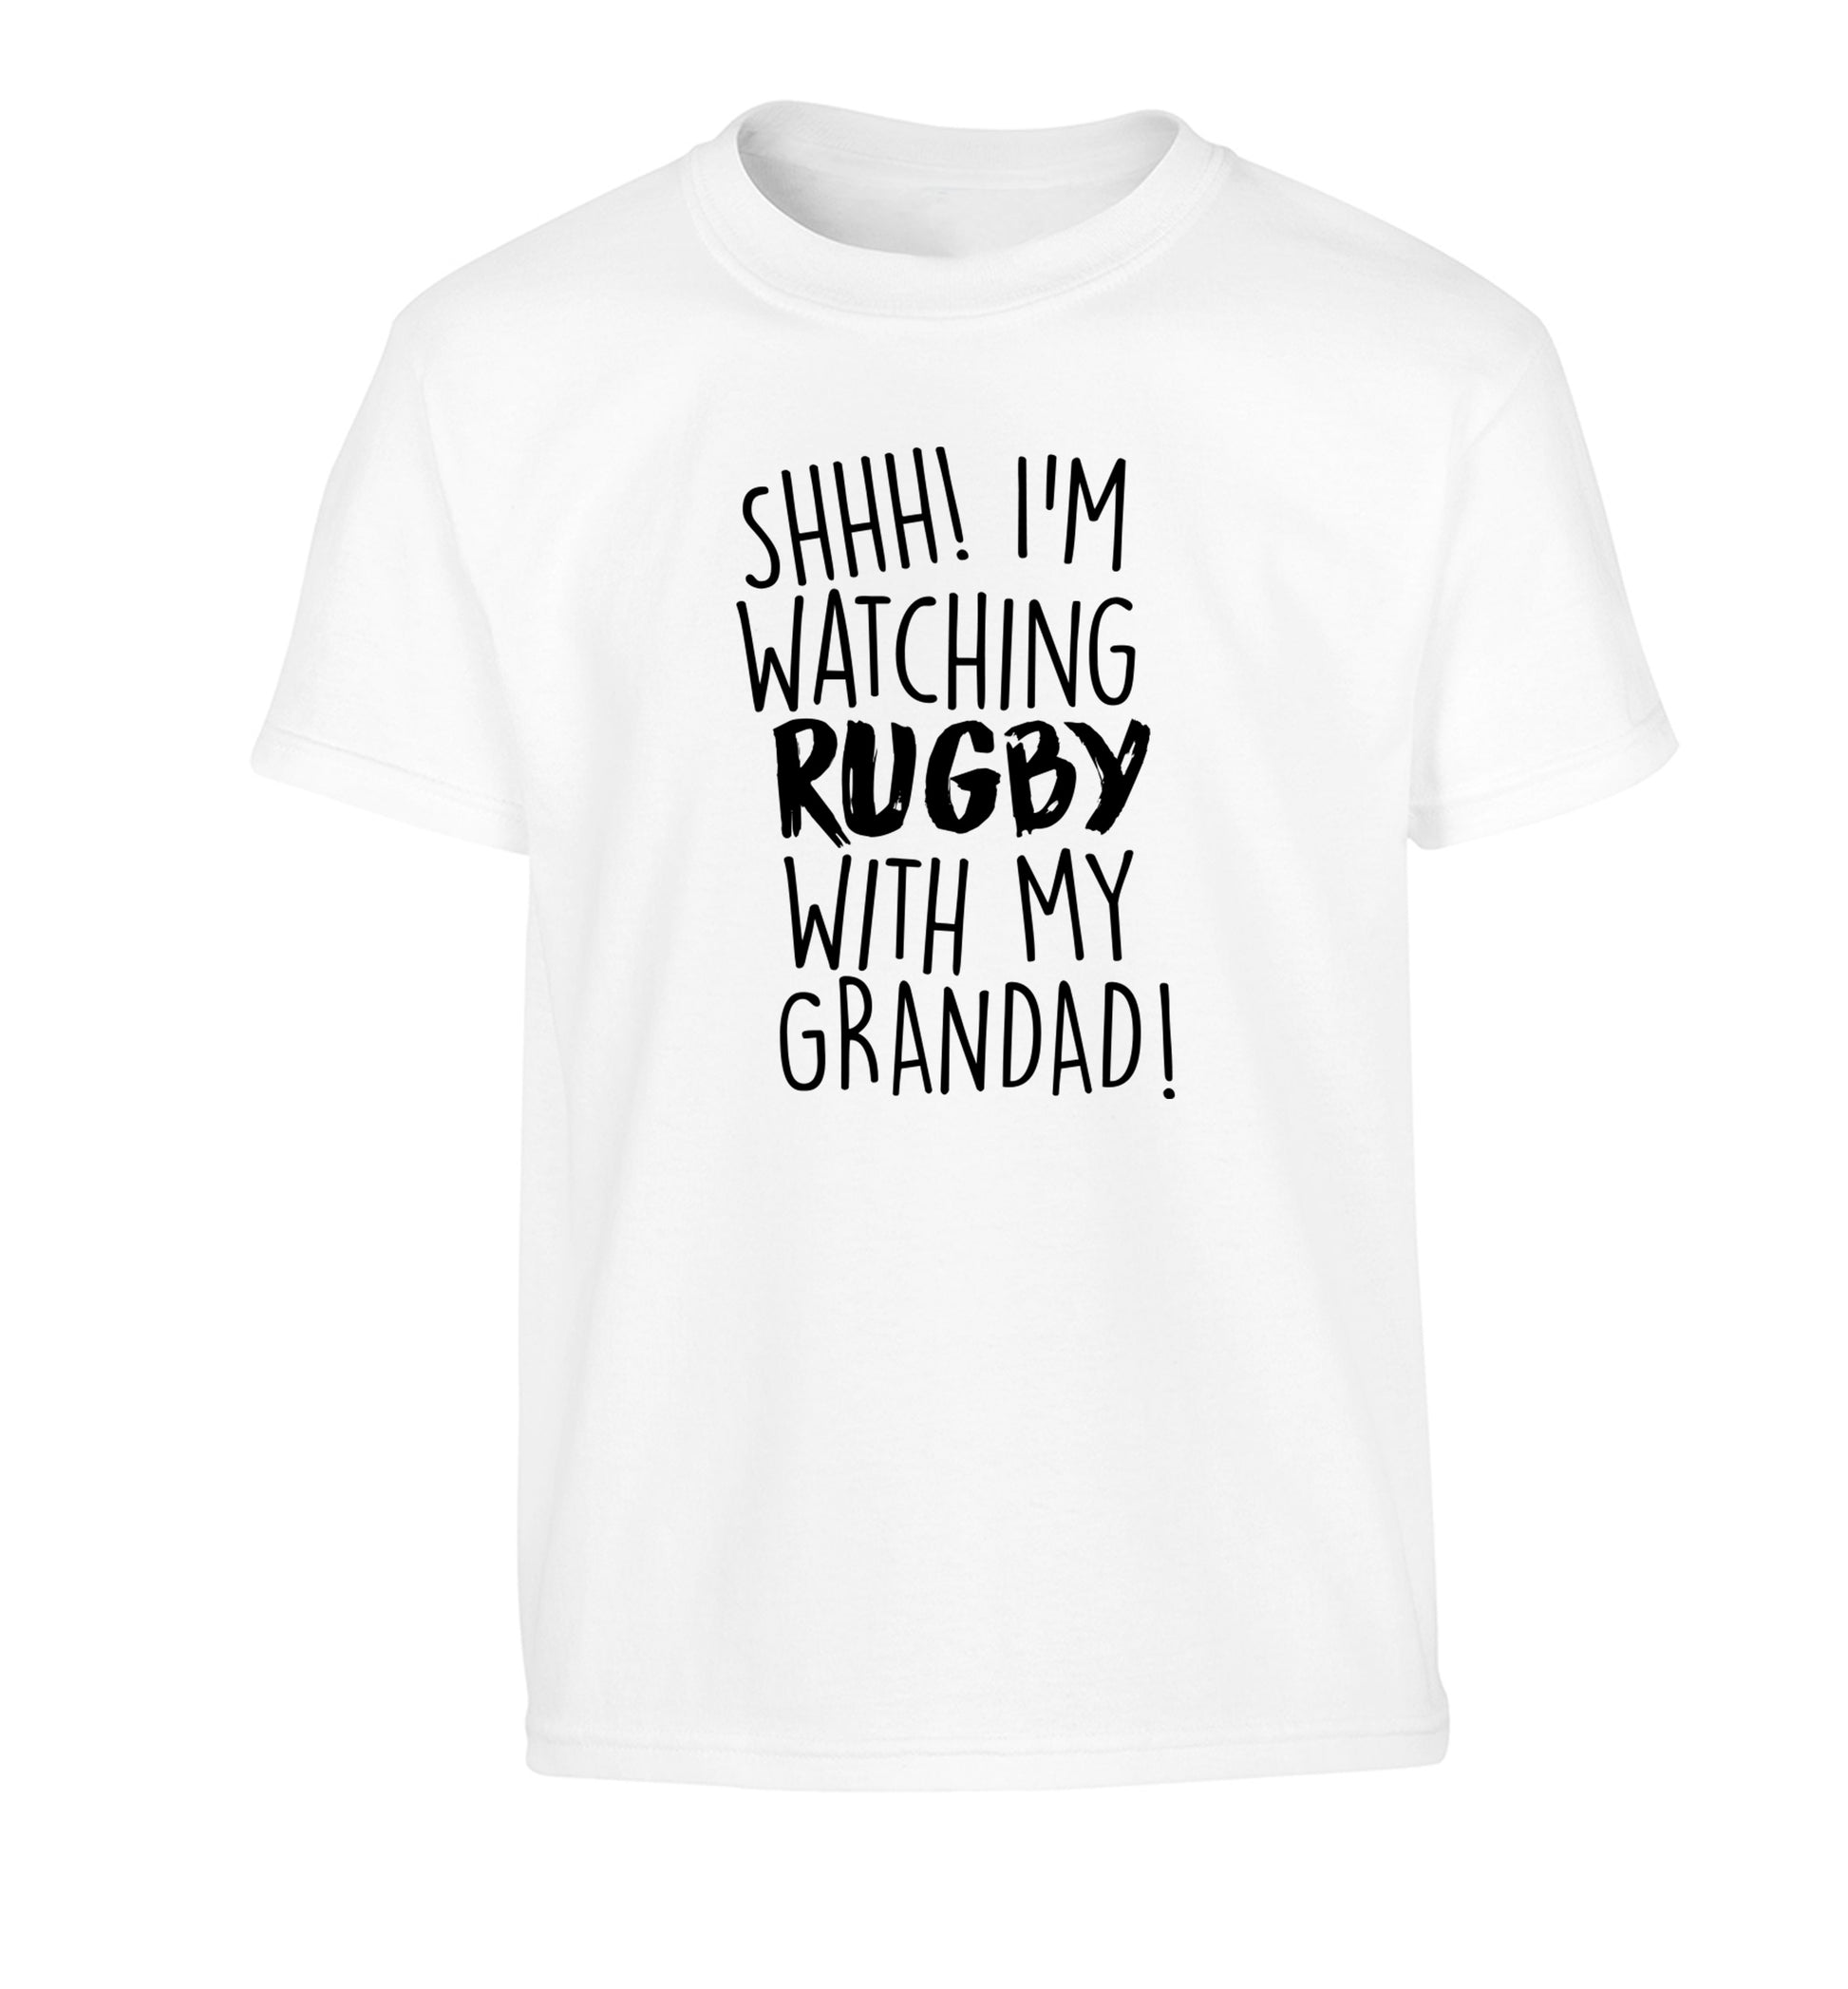 Shh I'm watching rugby with my grandad Children's white Tshirt 12-13 Years